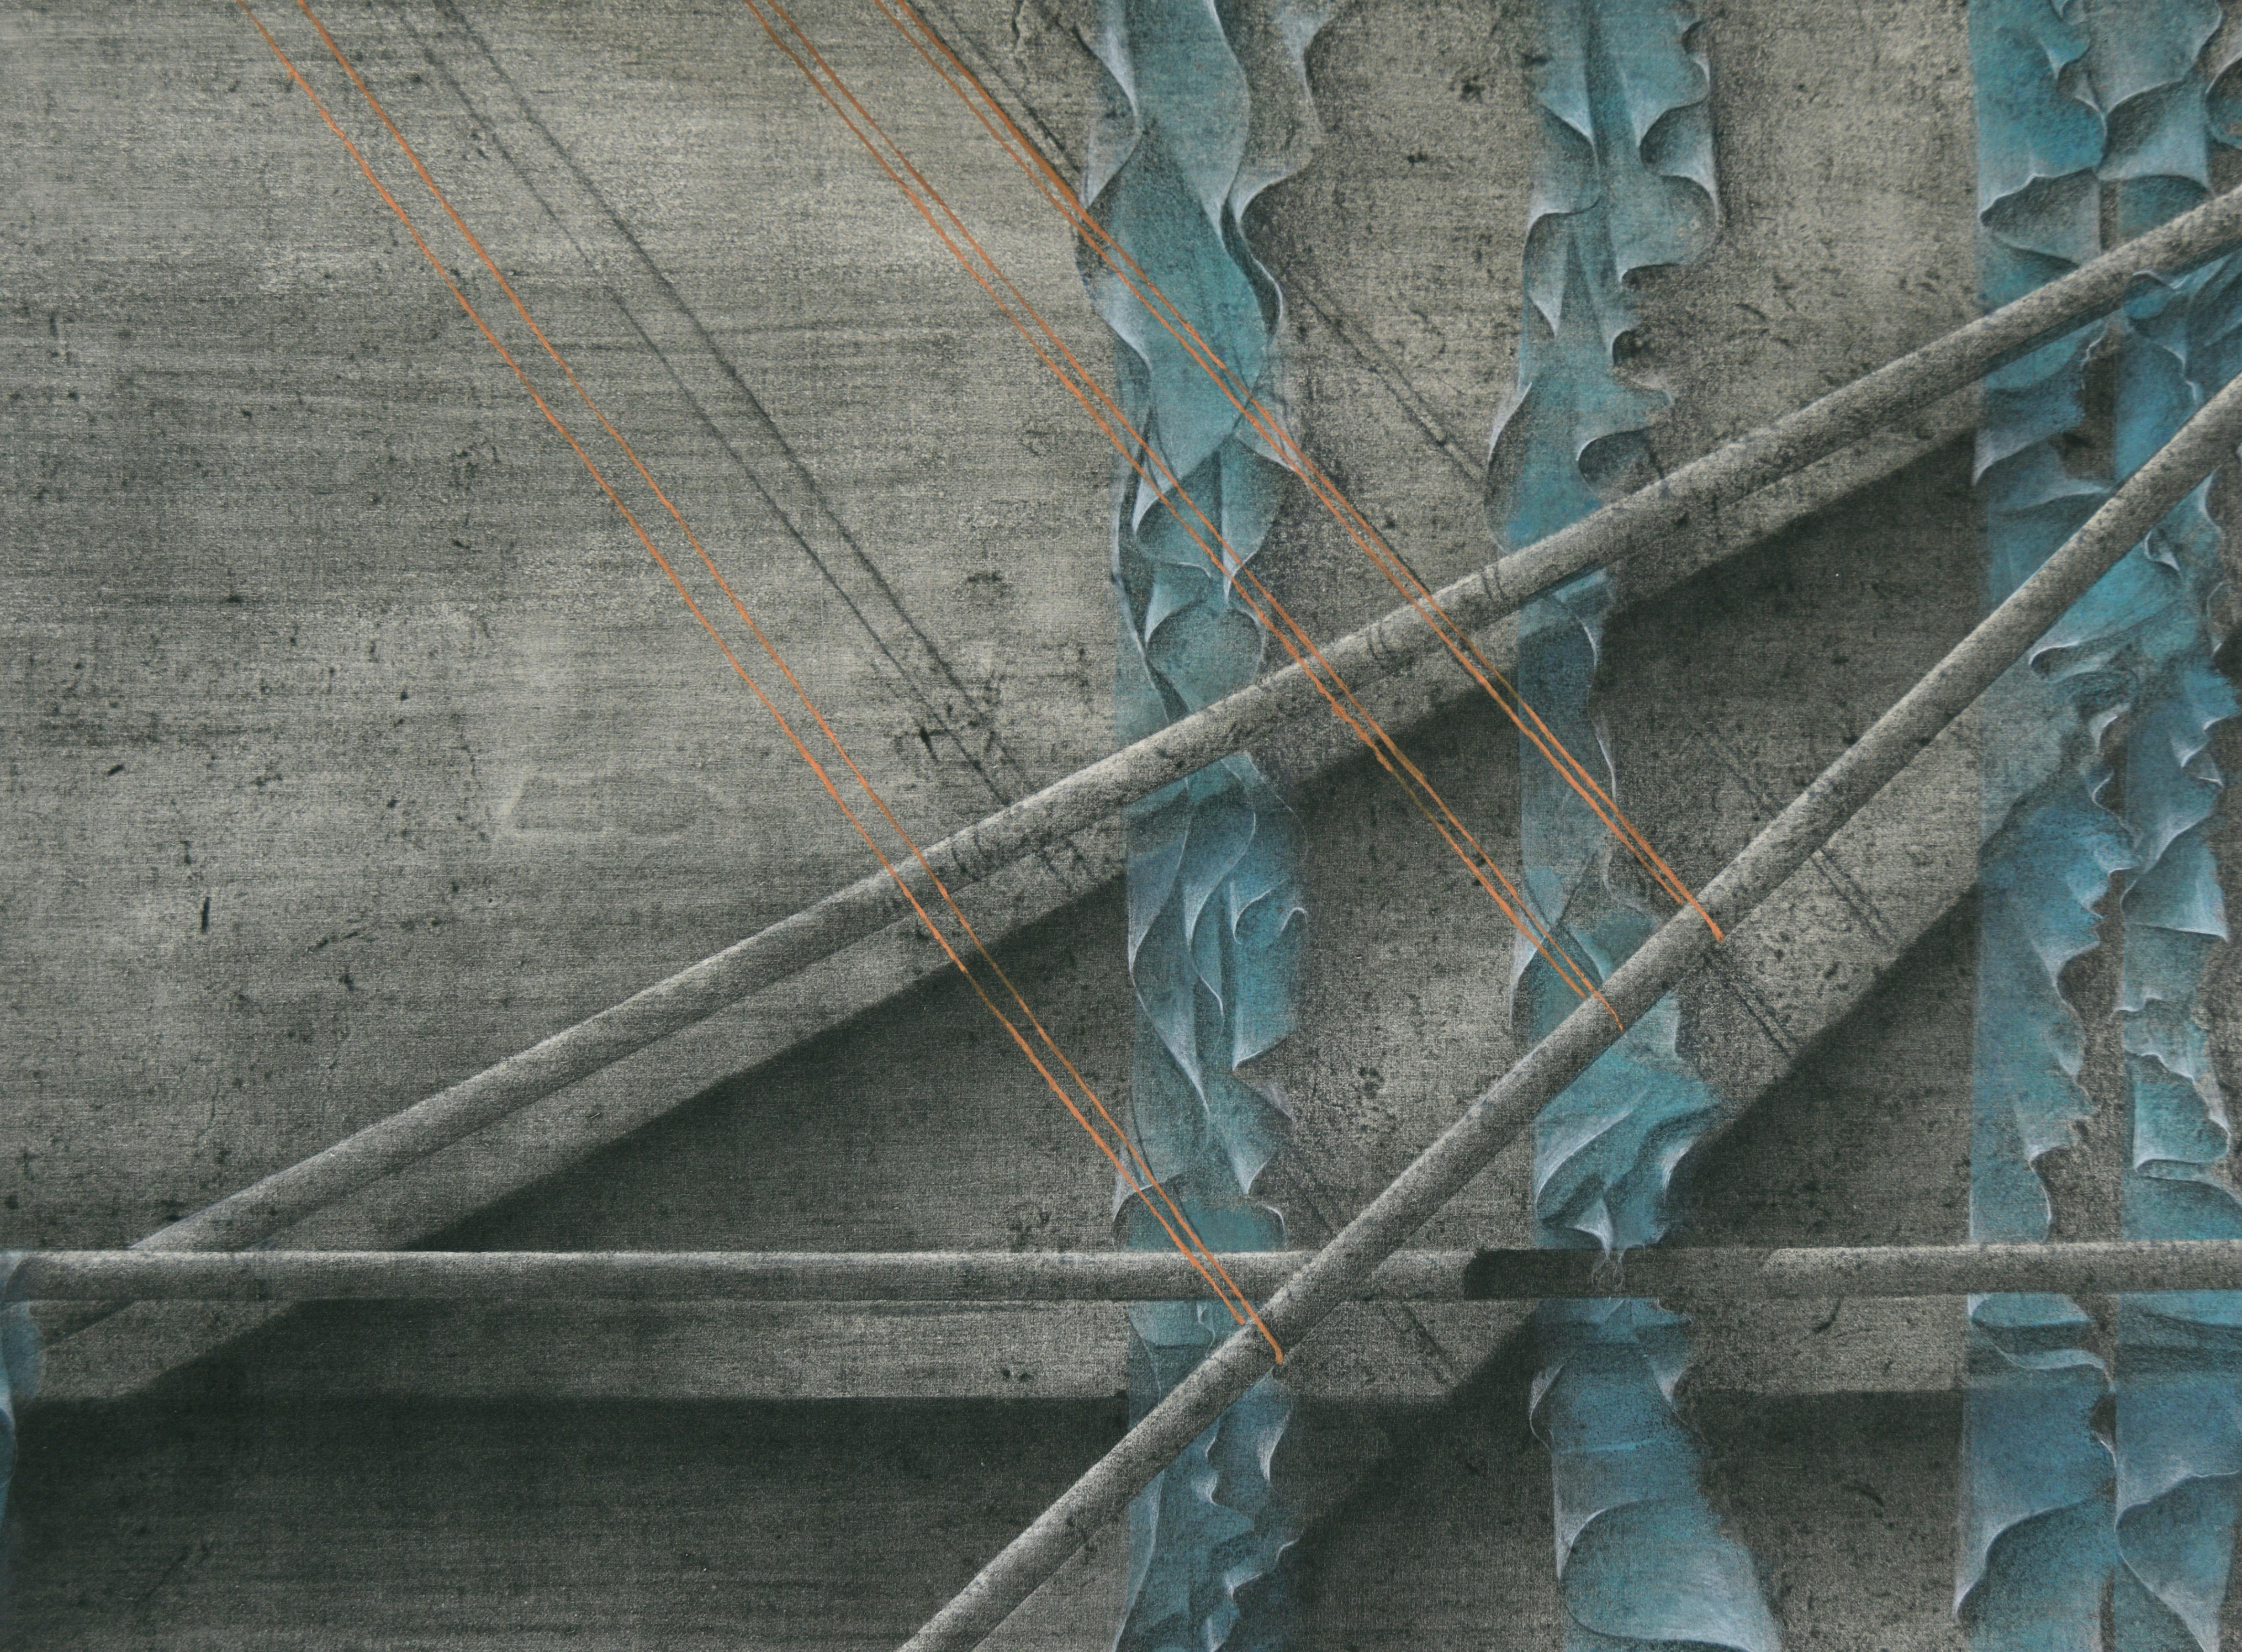 Teal Ribbons and Copper Thread - Fotorealistische Zeichnung auf Collotype  (Fotorealismus), Art, von Patricia A Pearce